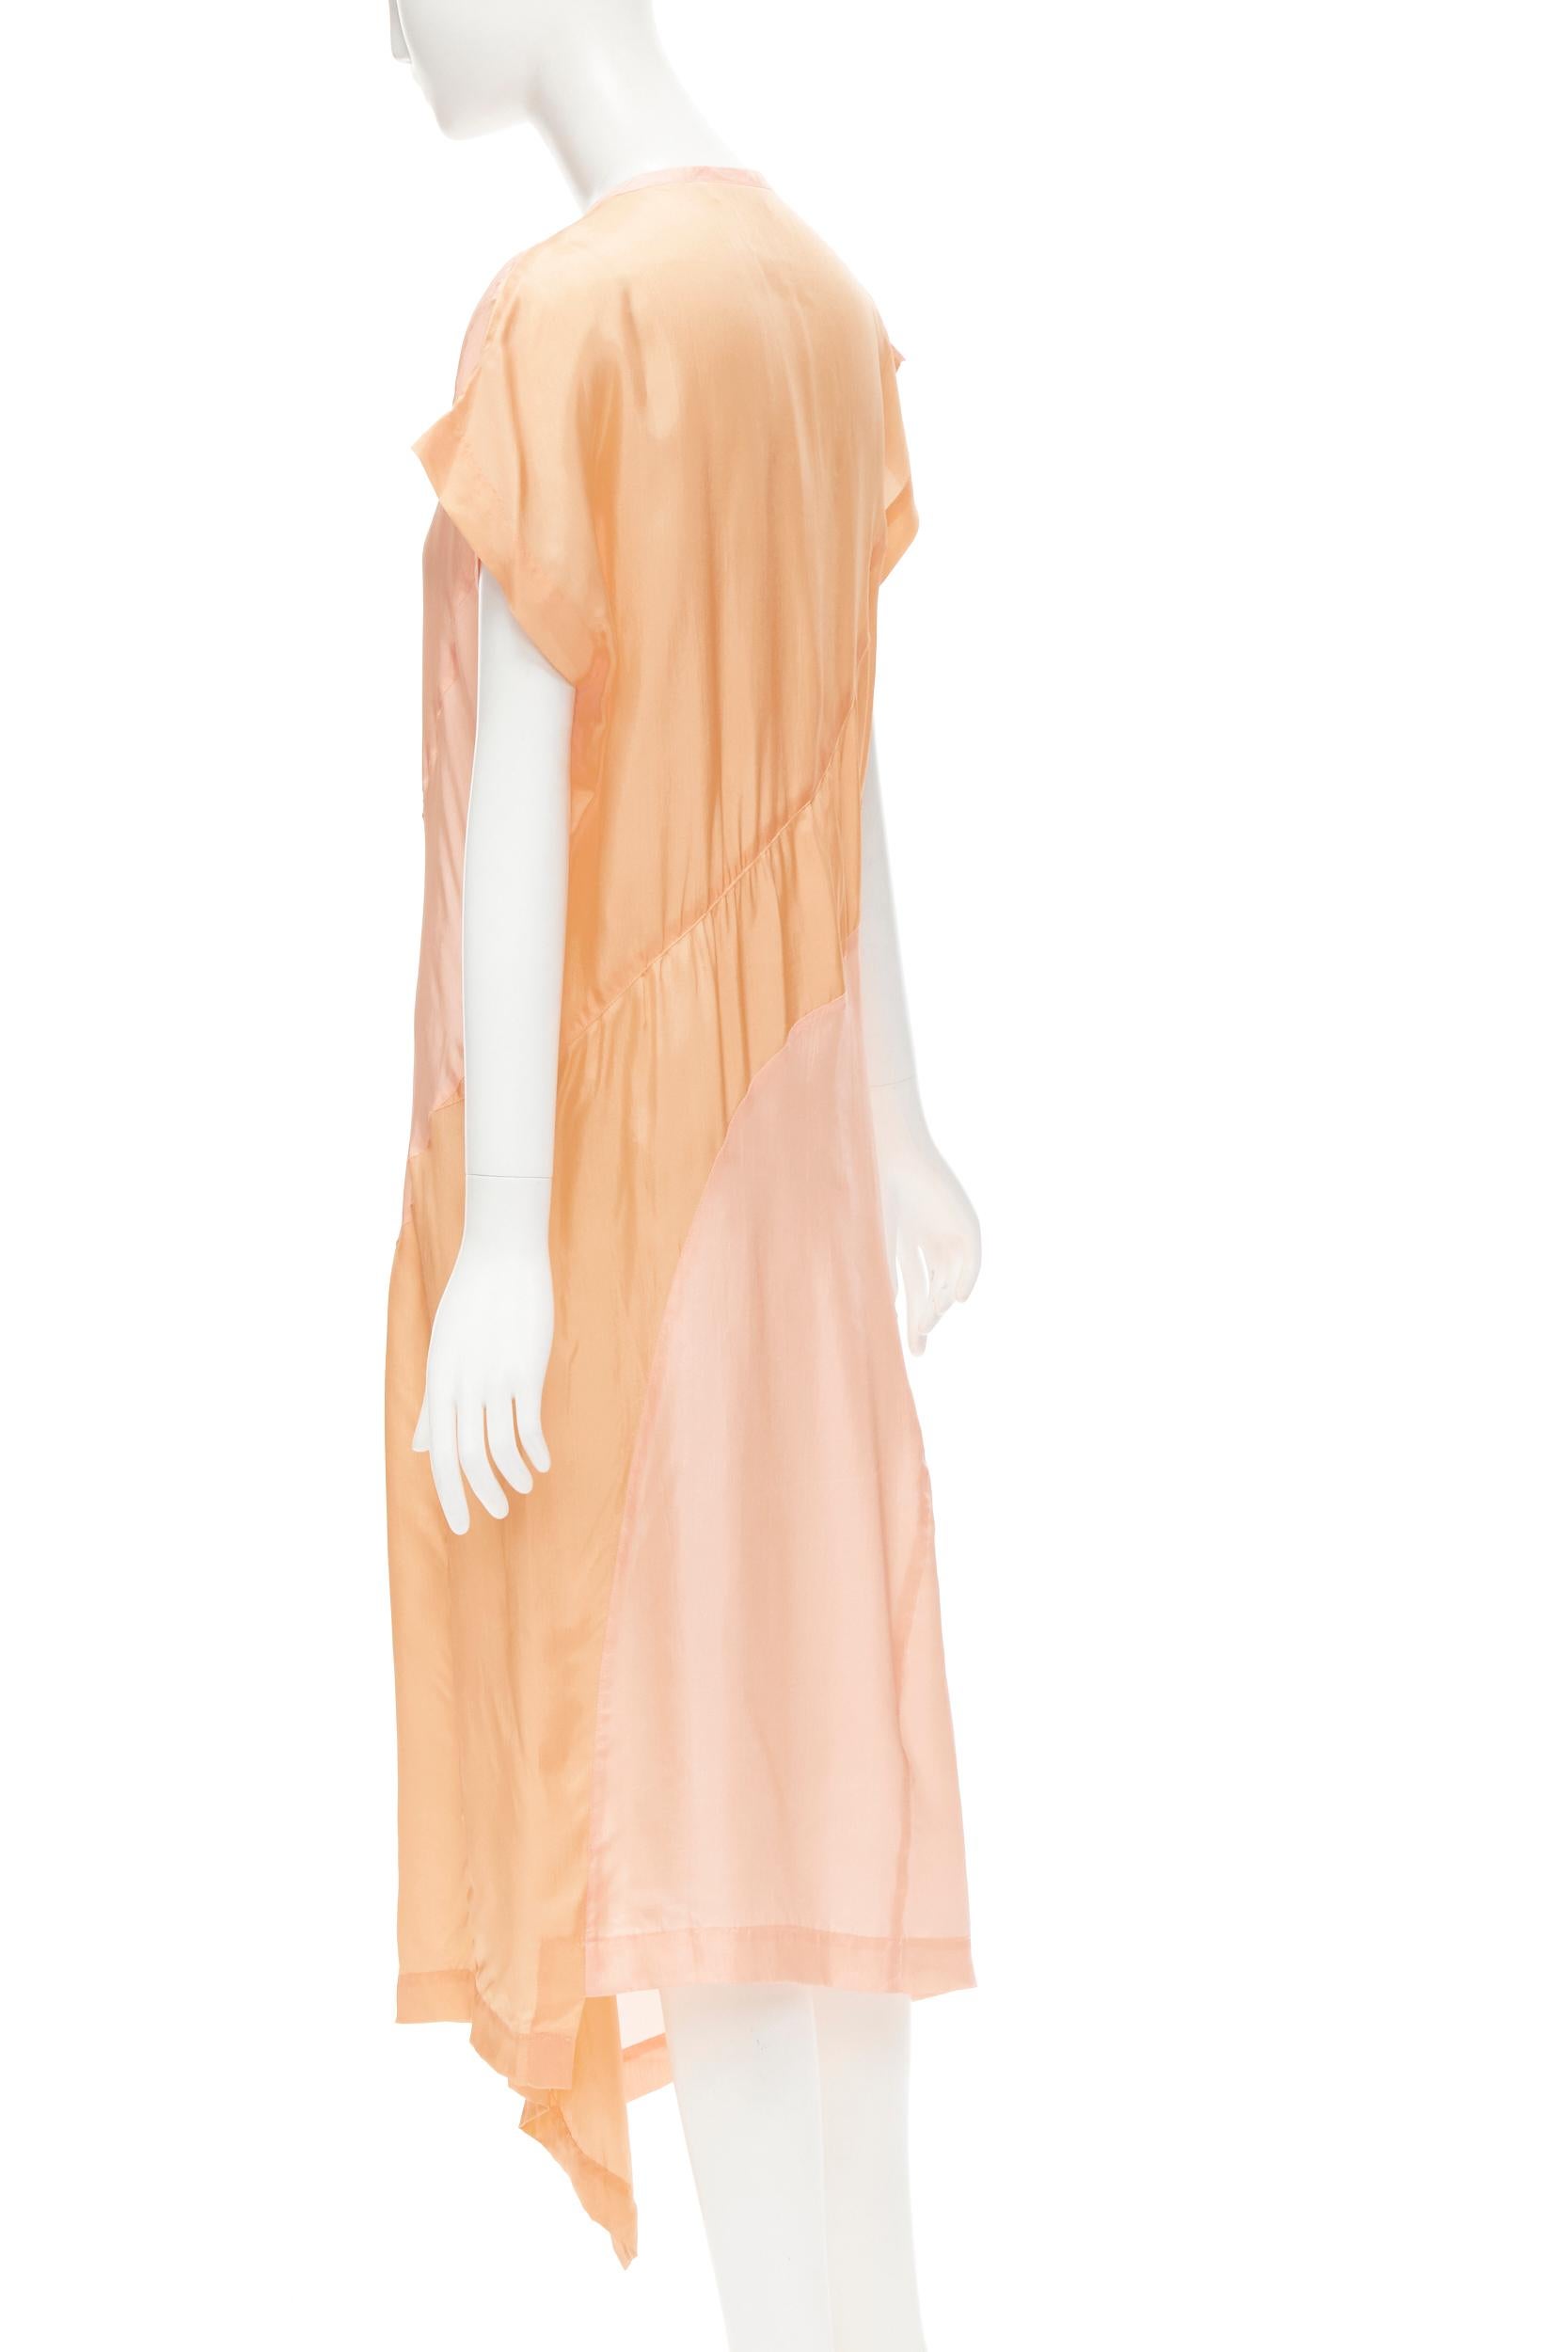 COMME DES GARCONS Vintage 1980's blush orange irregular seam bias cut dress S 2